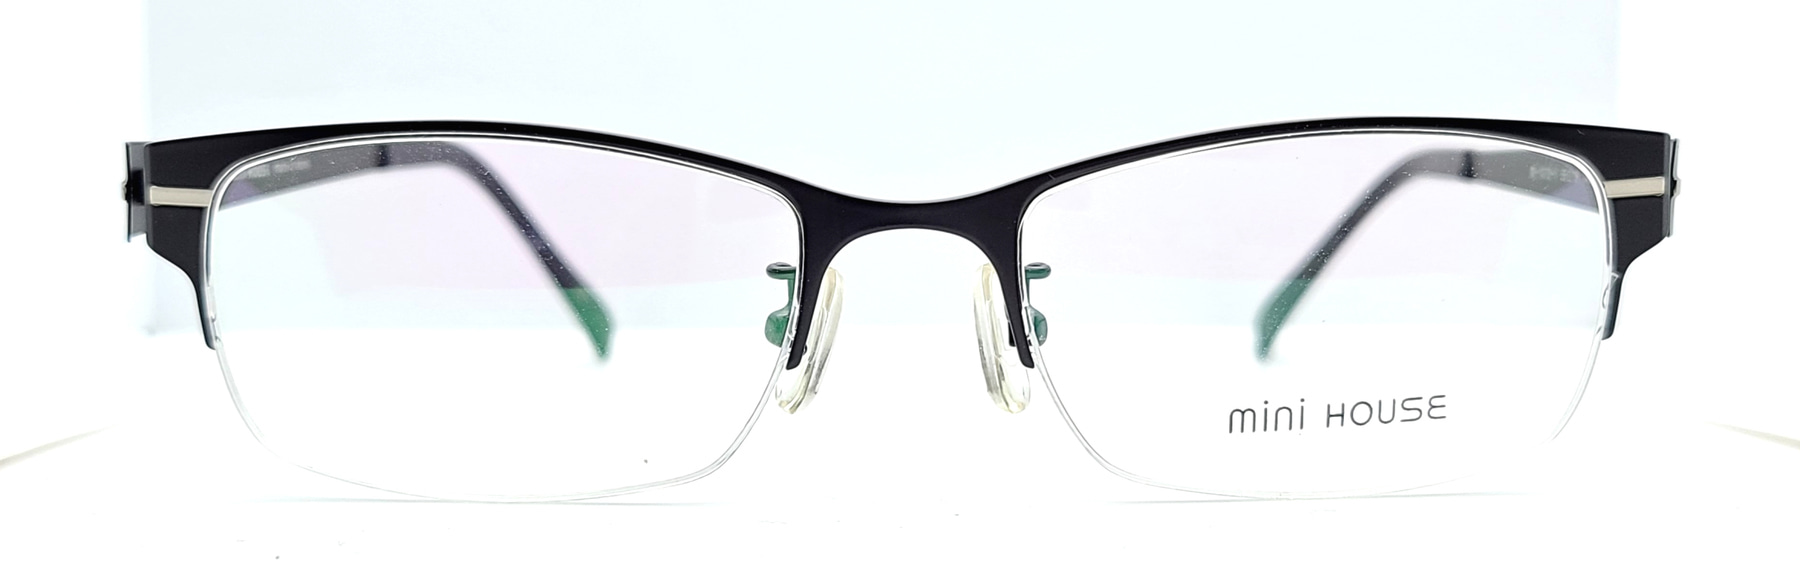 MINIHOUSE M-1072-1, Korean glasses, sunglasses, eyeglasses, glasses